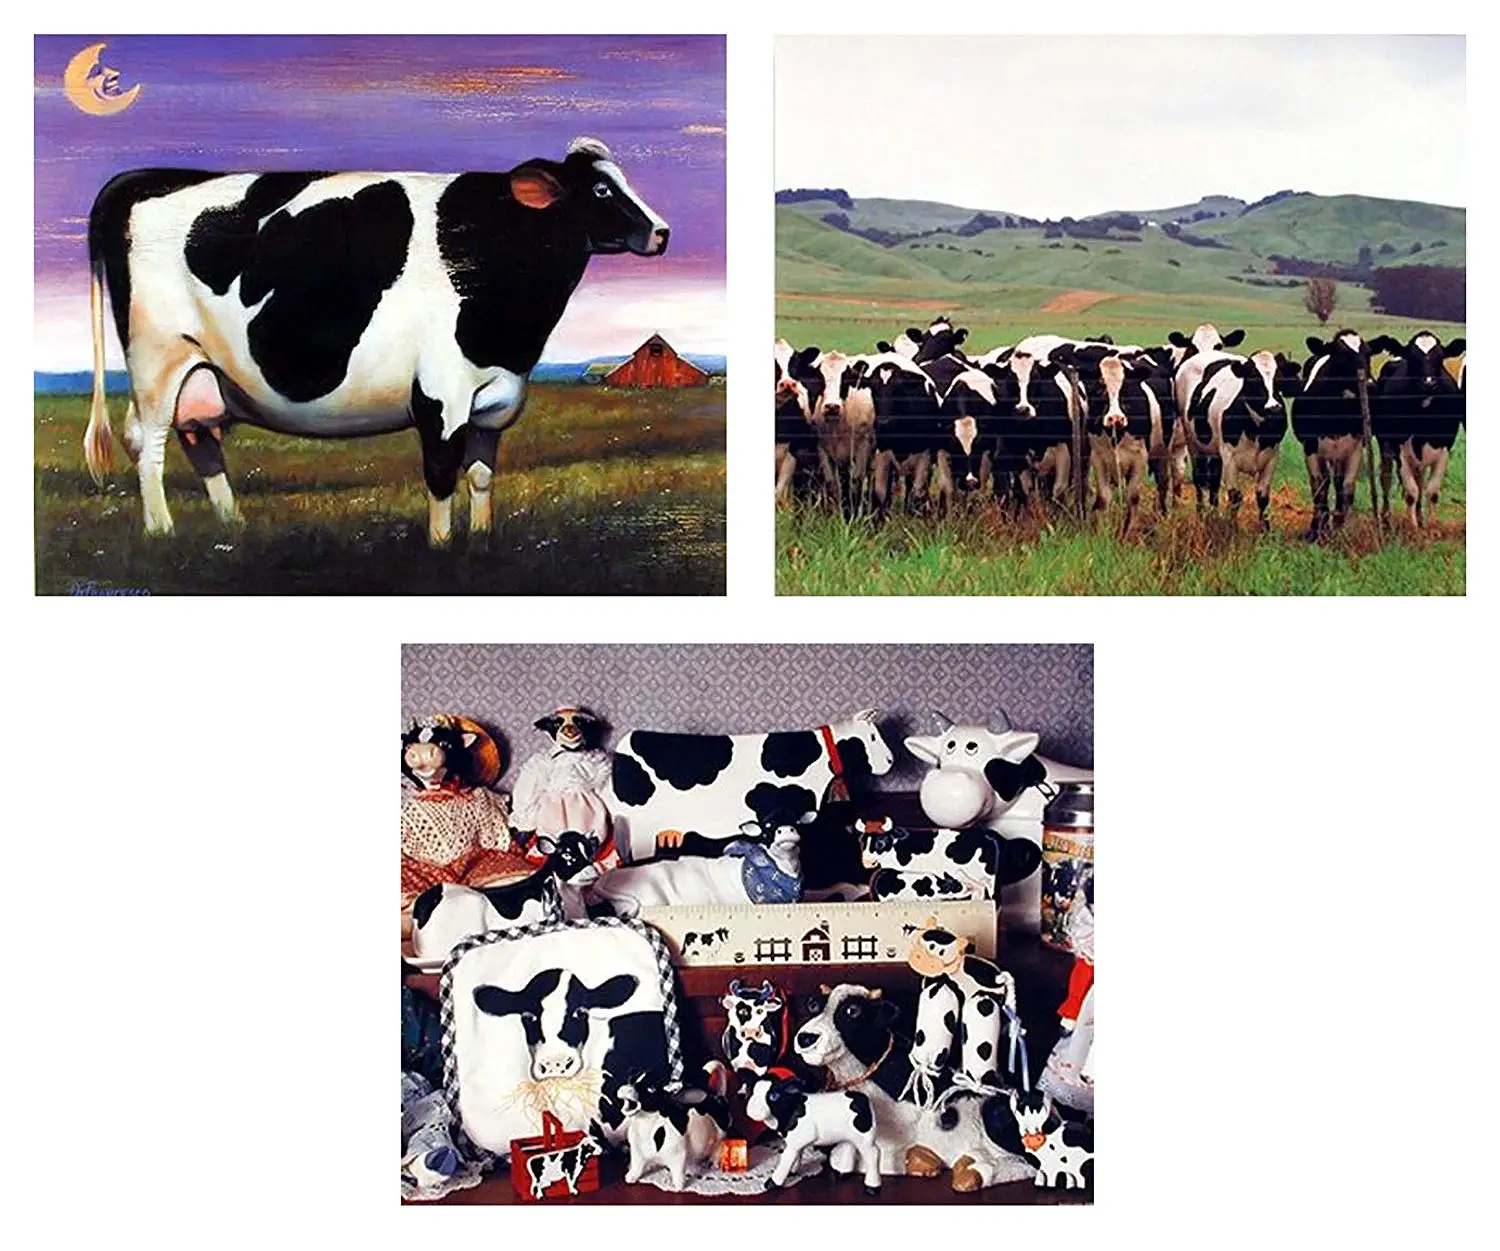 Cheap Farm Animal Wall Art Find Farm Animal Wall Art Deals On Line At Alibaba Com